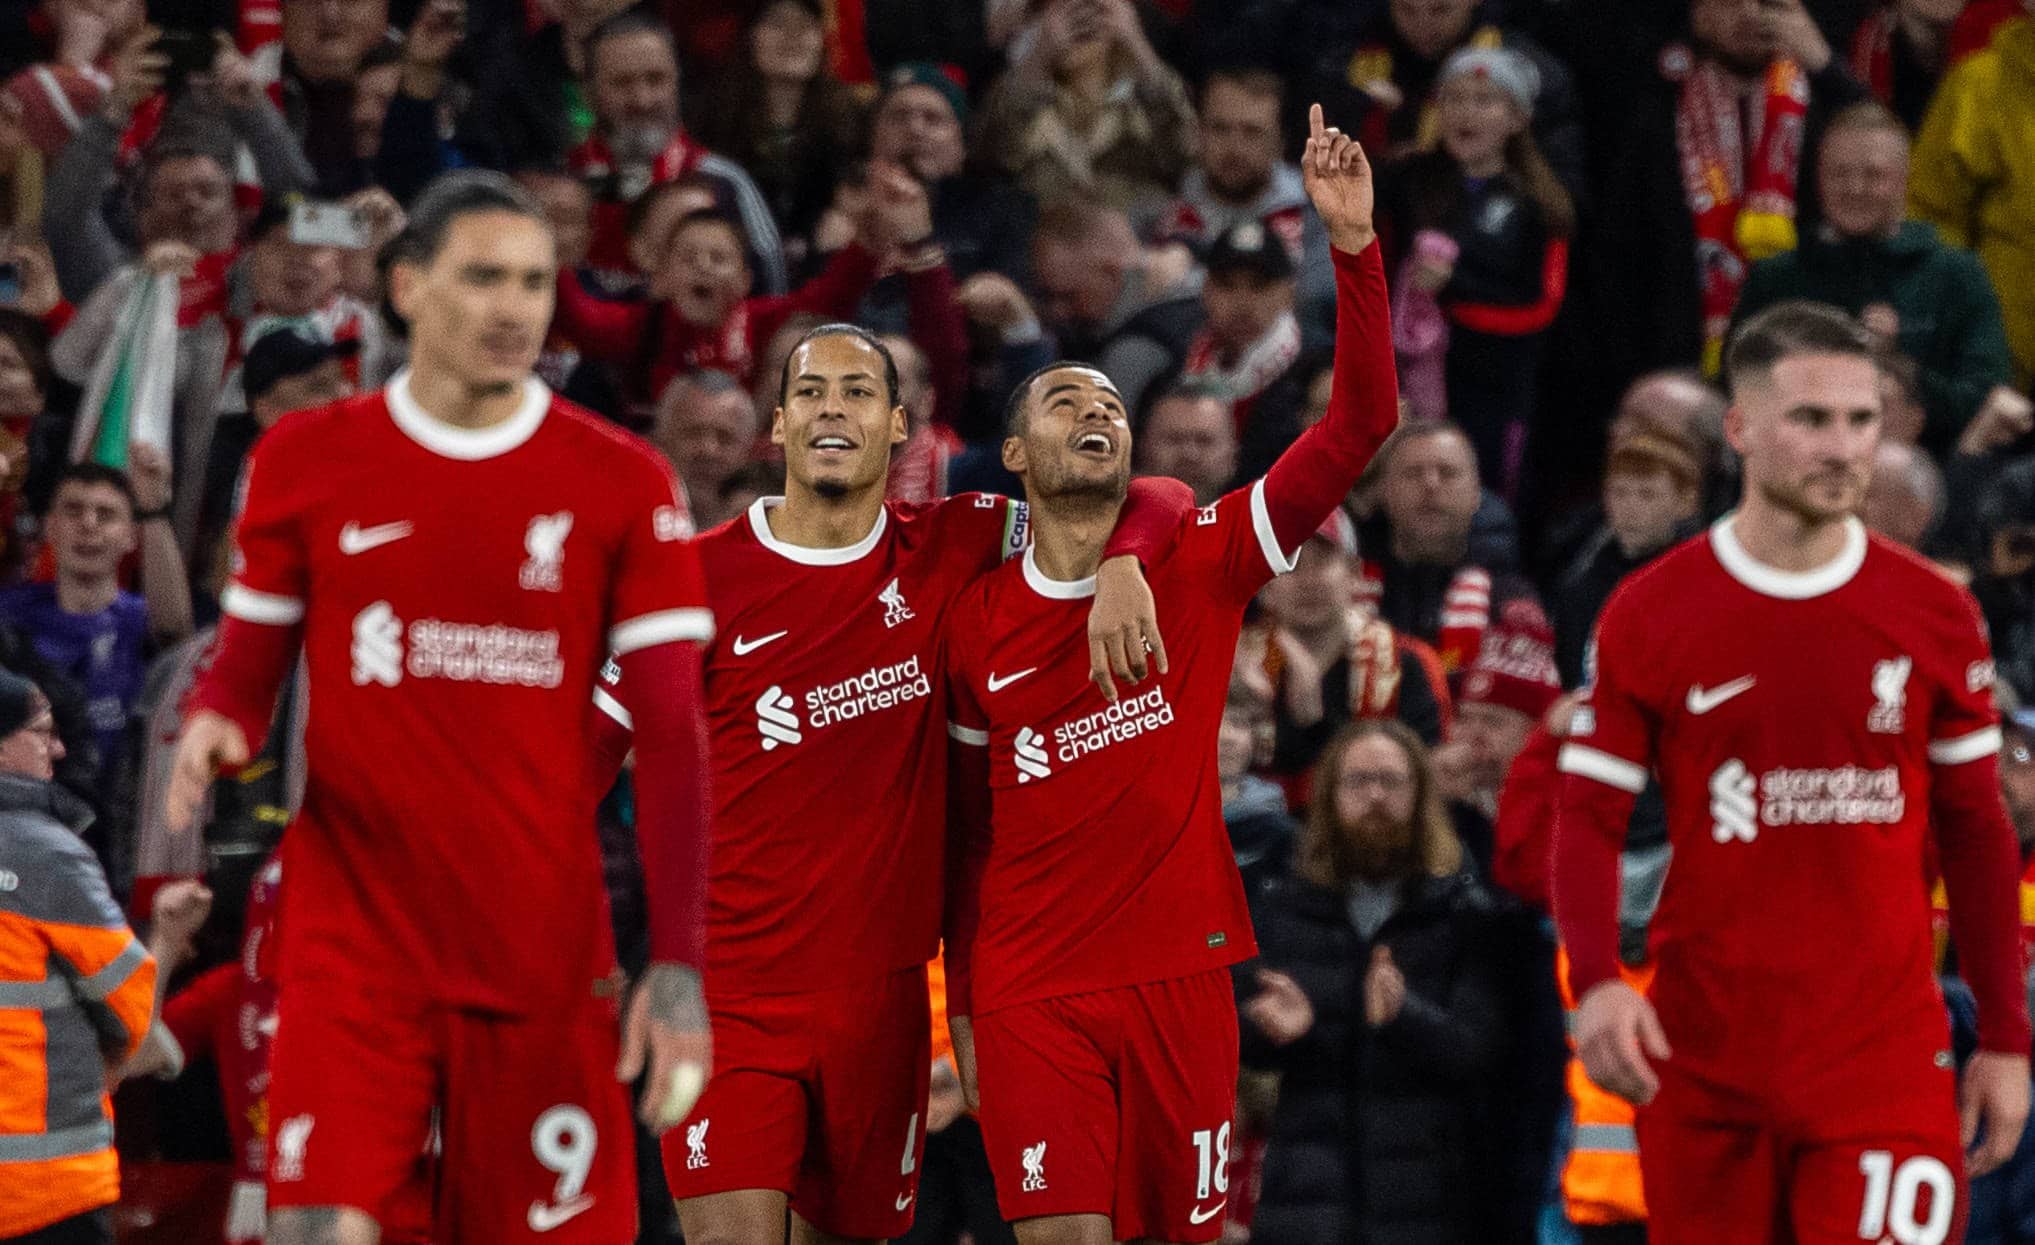 - Liverpool vence e recupera a liderança da Premier League